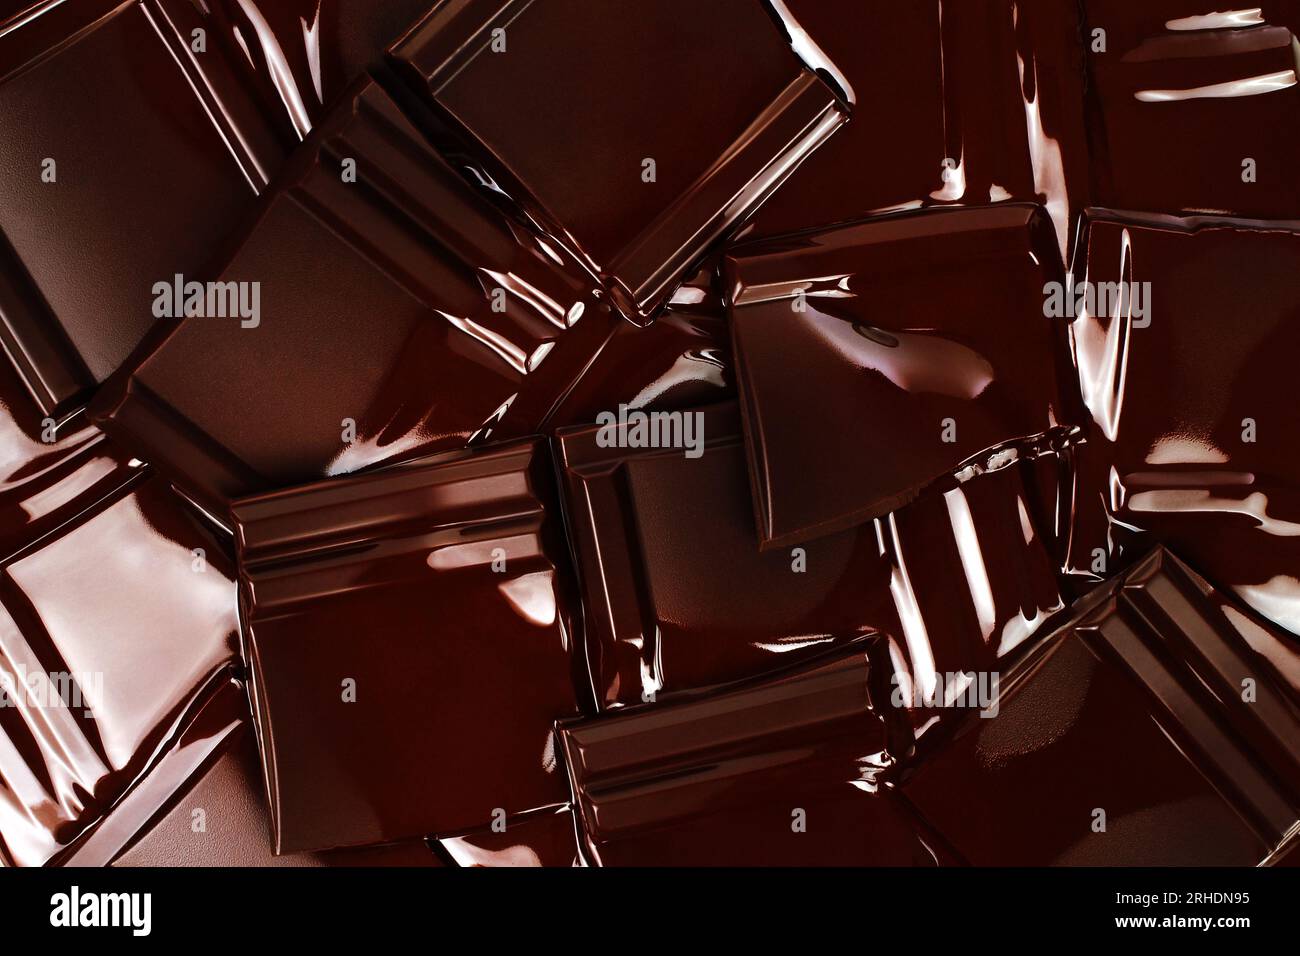 Melted Dark Chocolate Bars background close-up Stock Photo